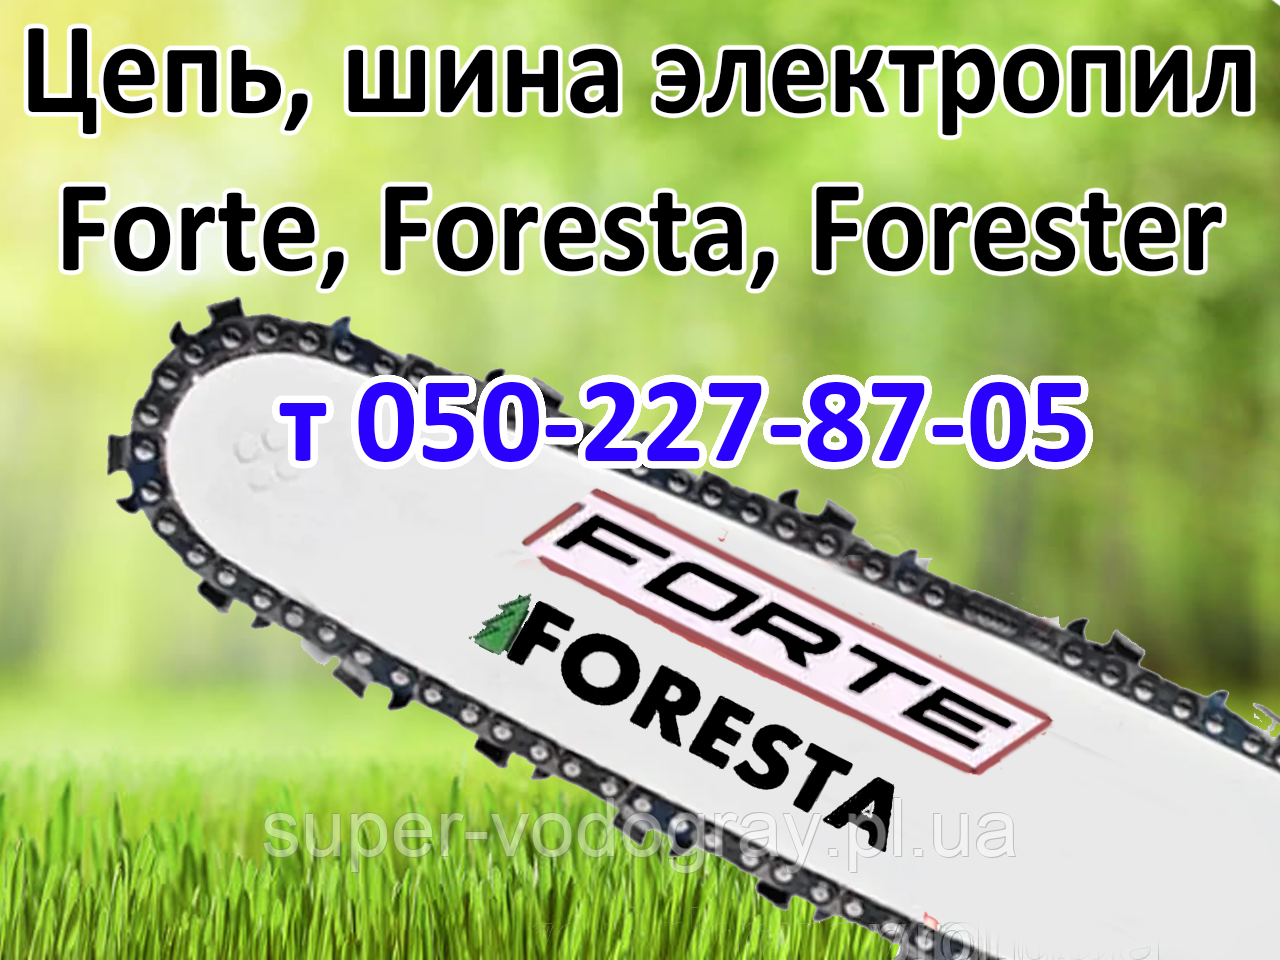 Ланцюг, шина для електропили Foresta, Forester